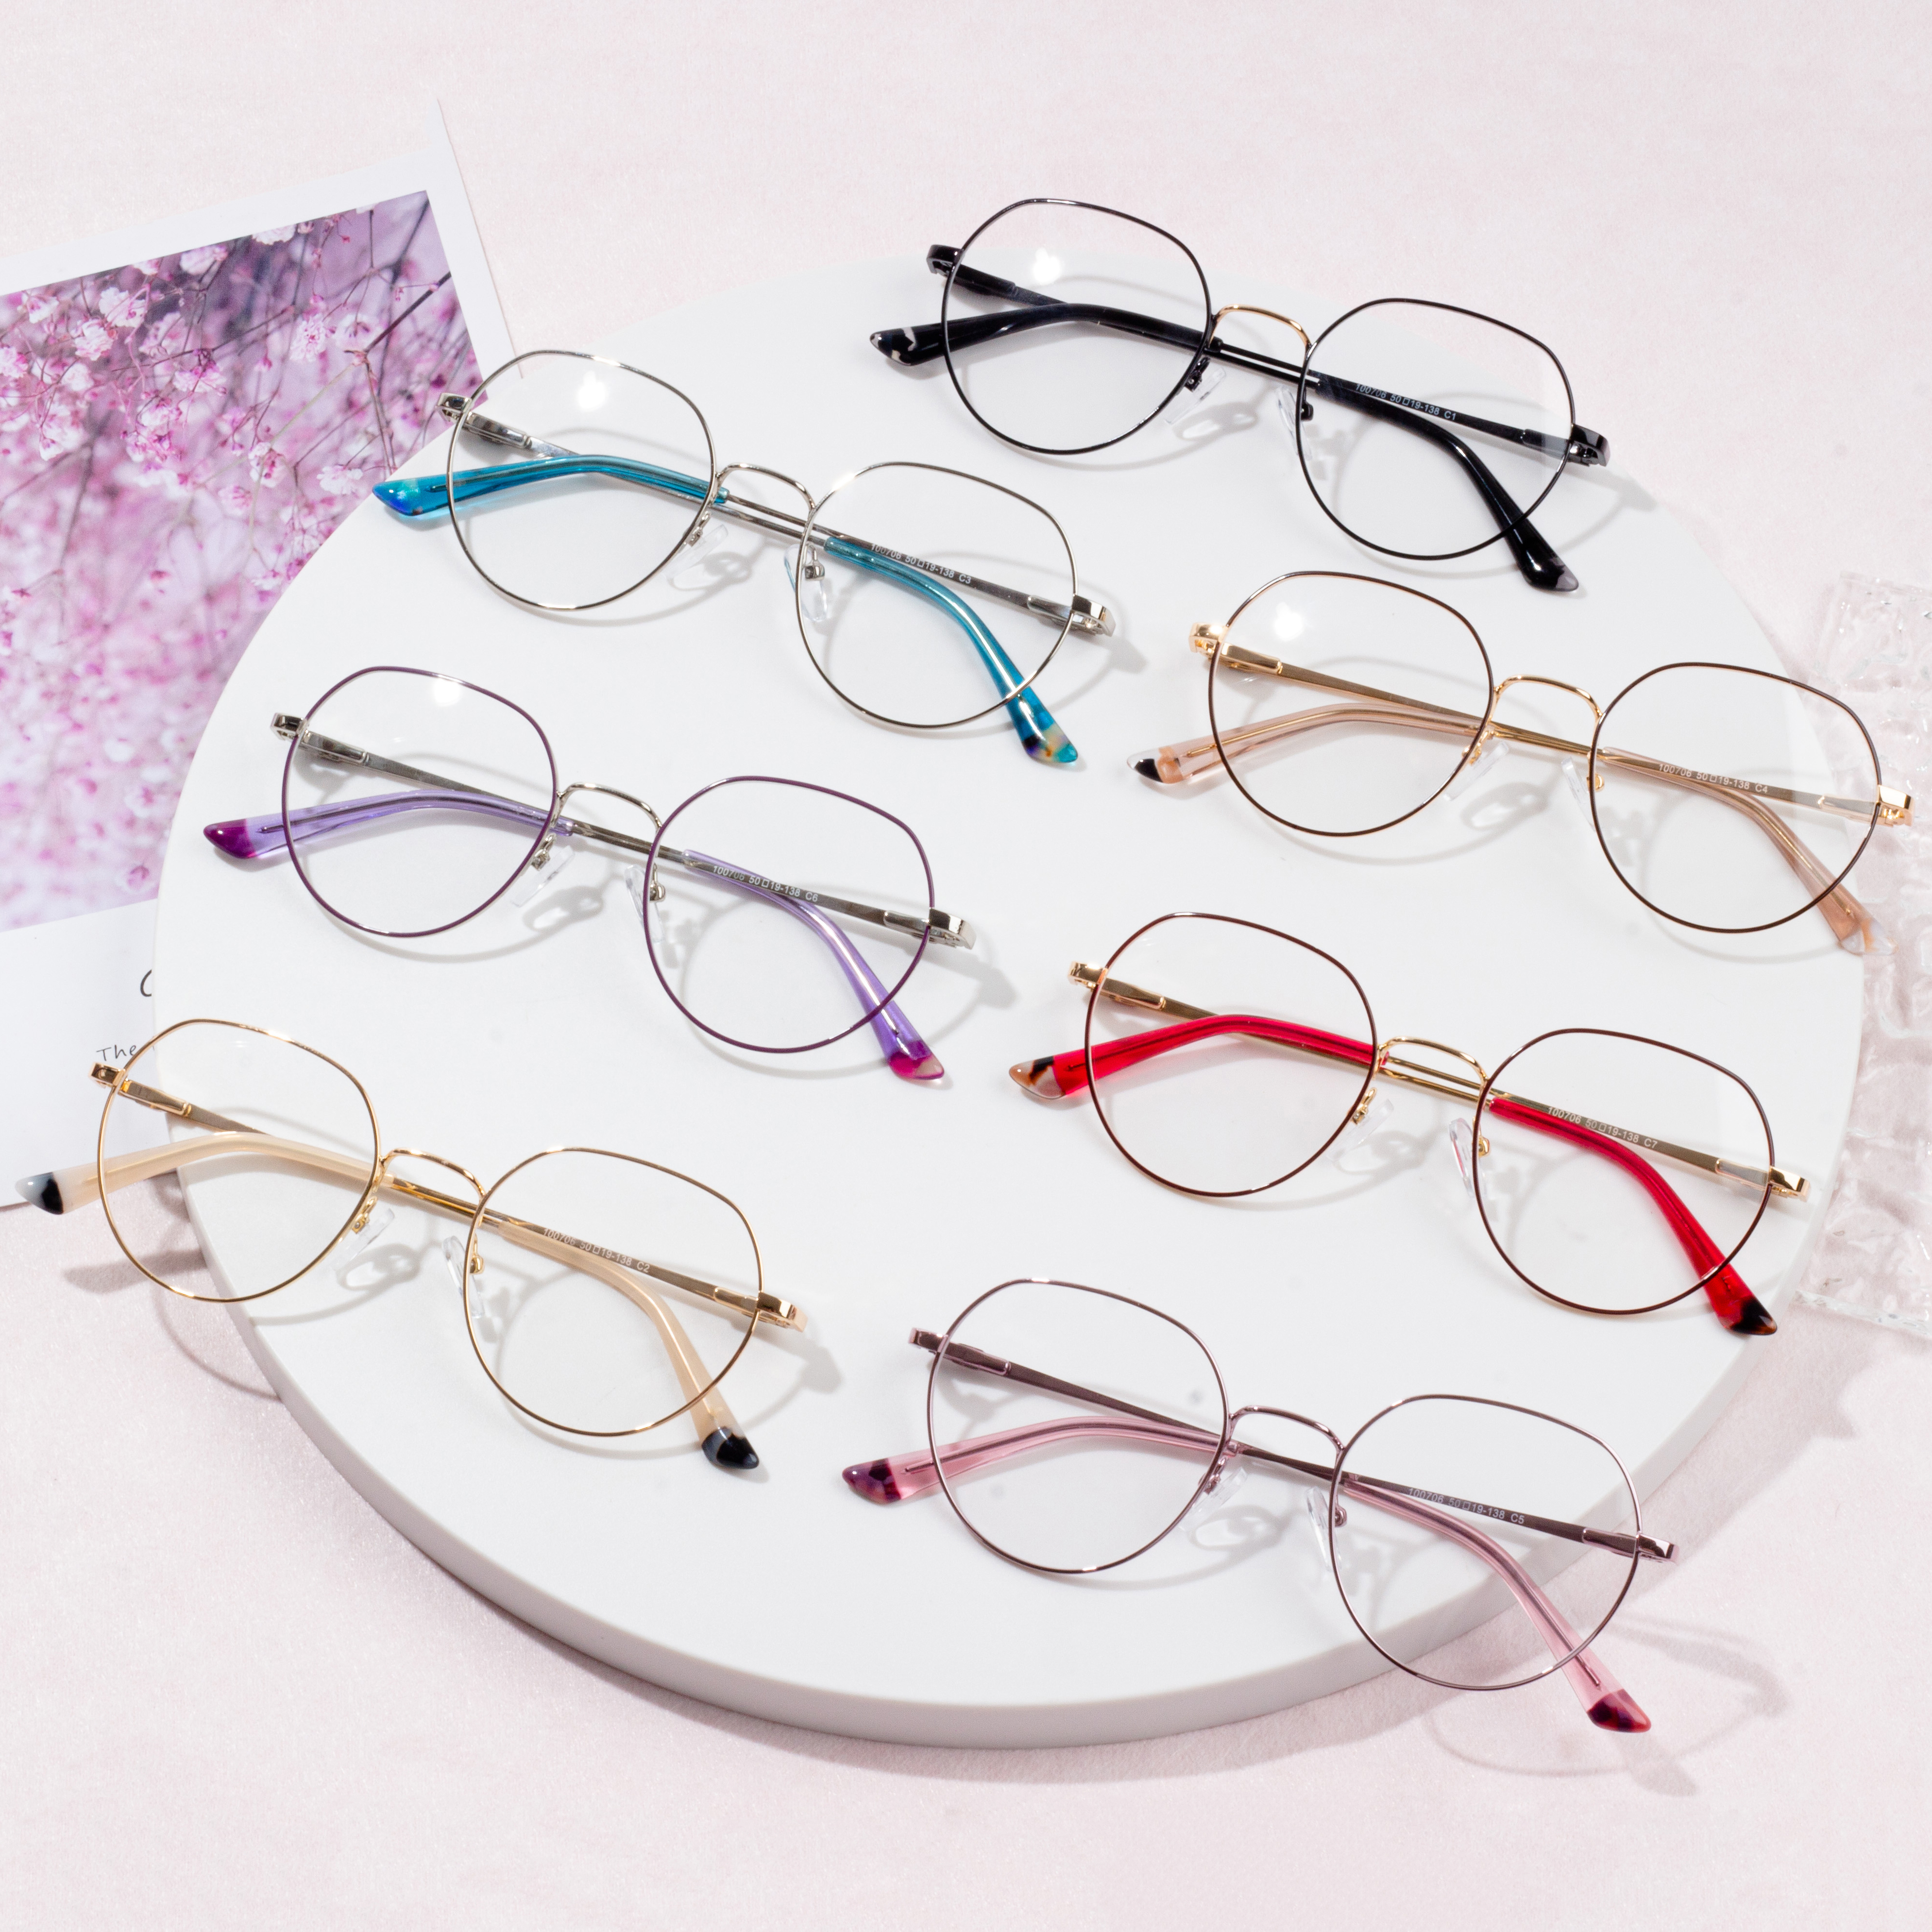 Hot eyeglasses spectacle frames retro